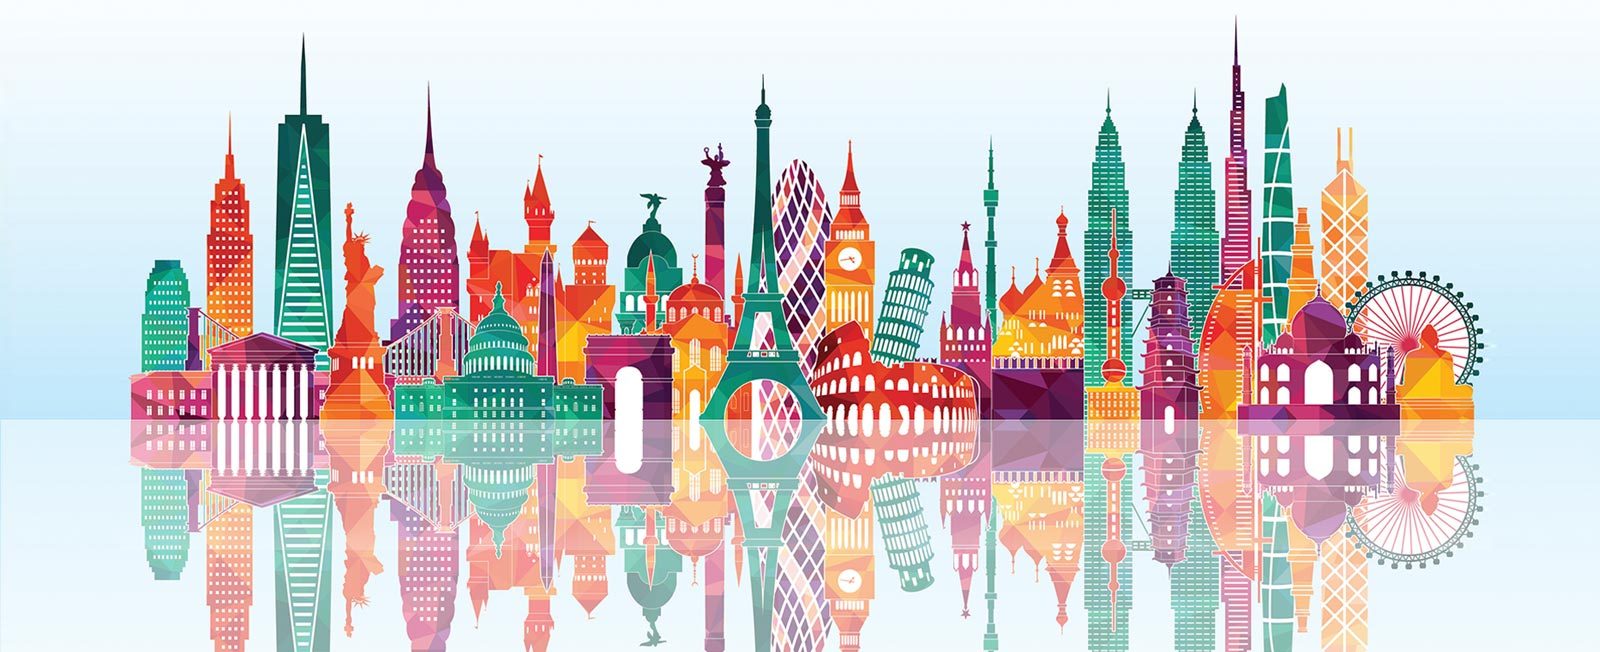 Illustration of world landmarks as one colorful big city